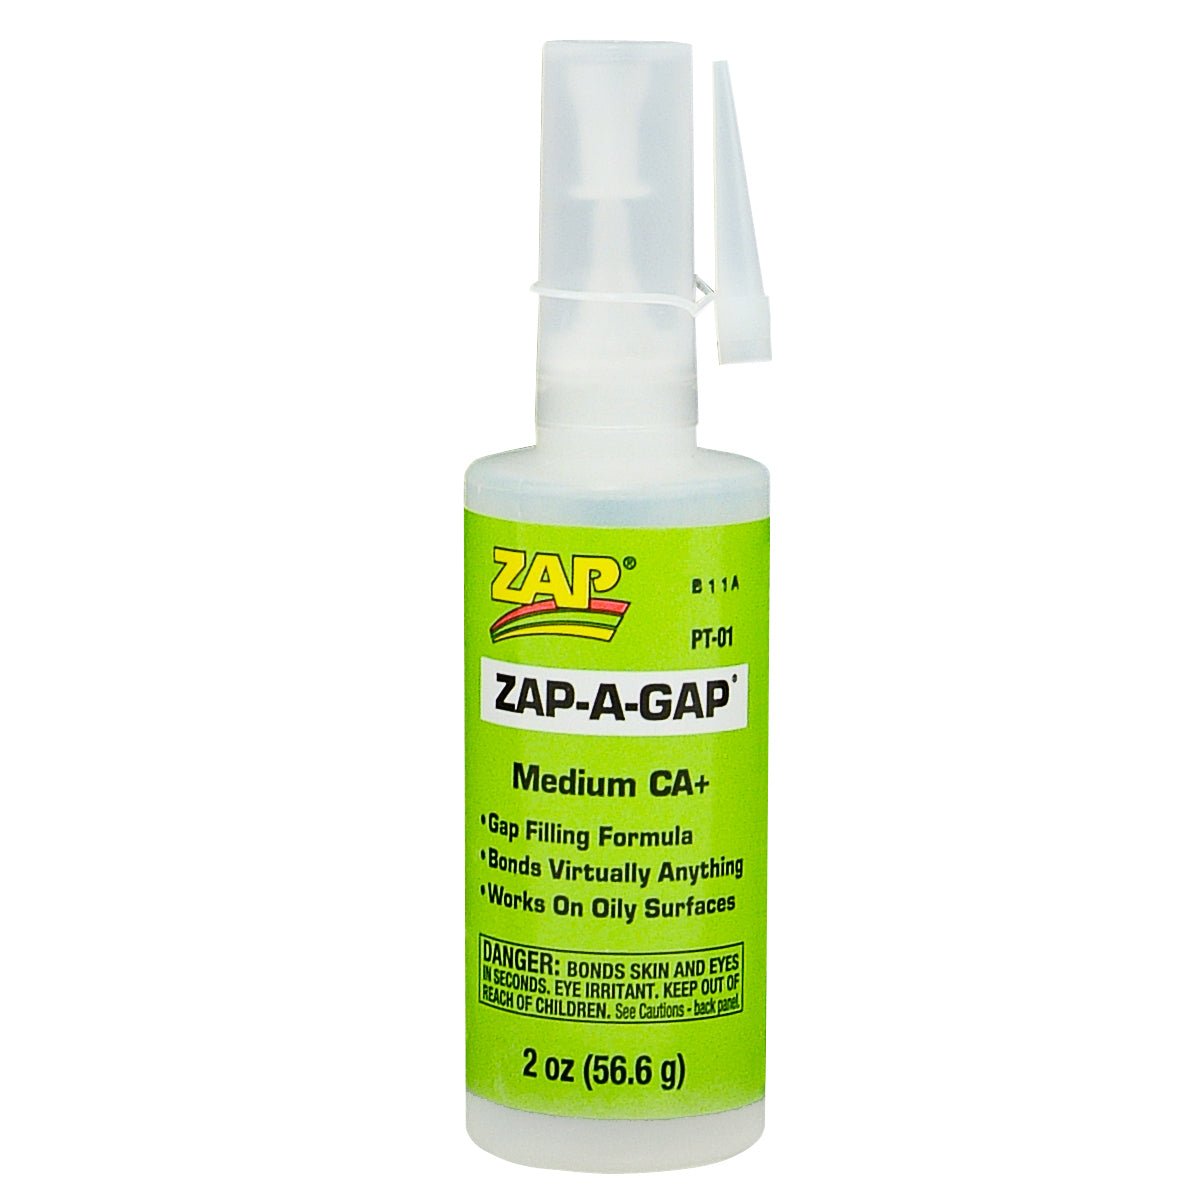 Zap A Gap Medium CA+, 2oz